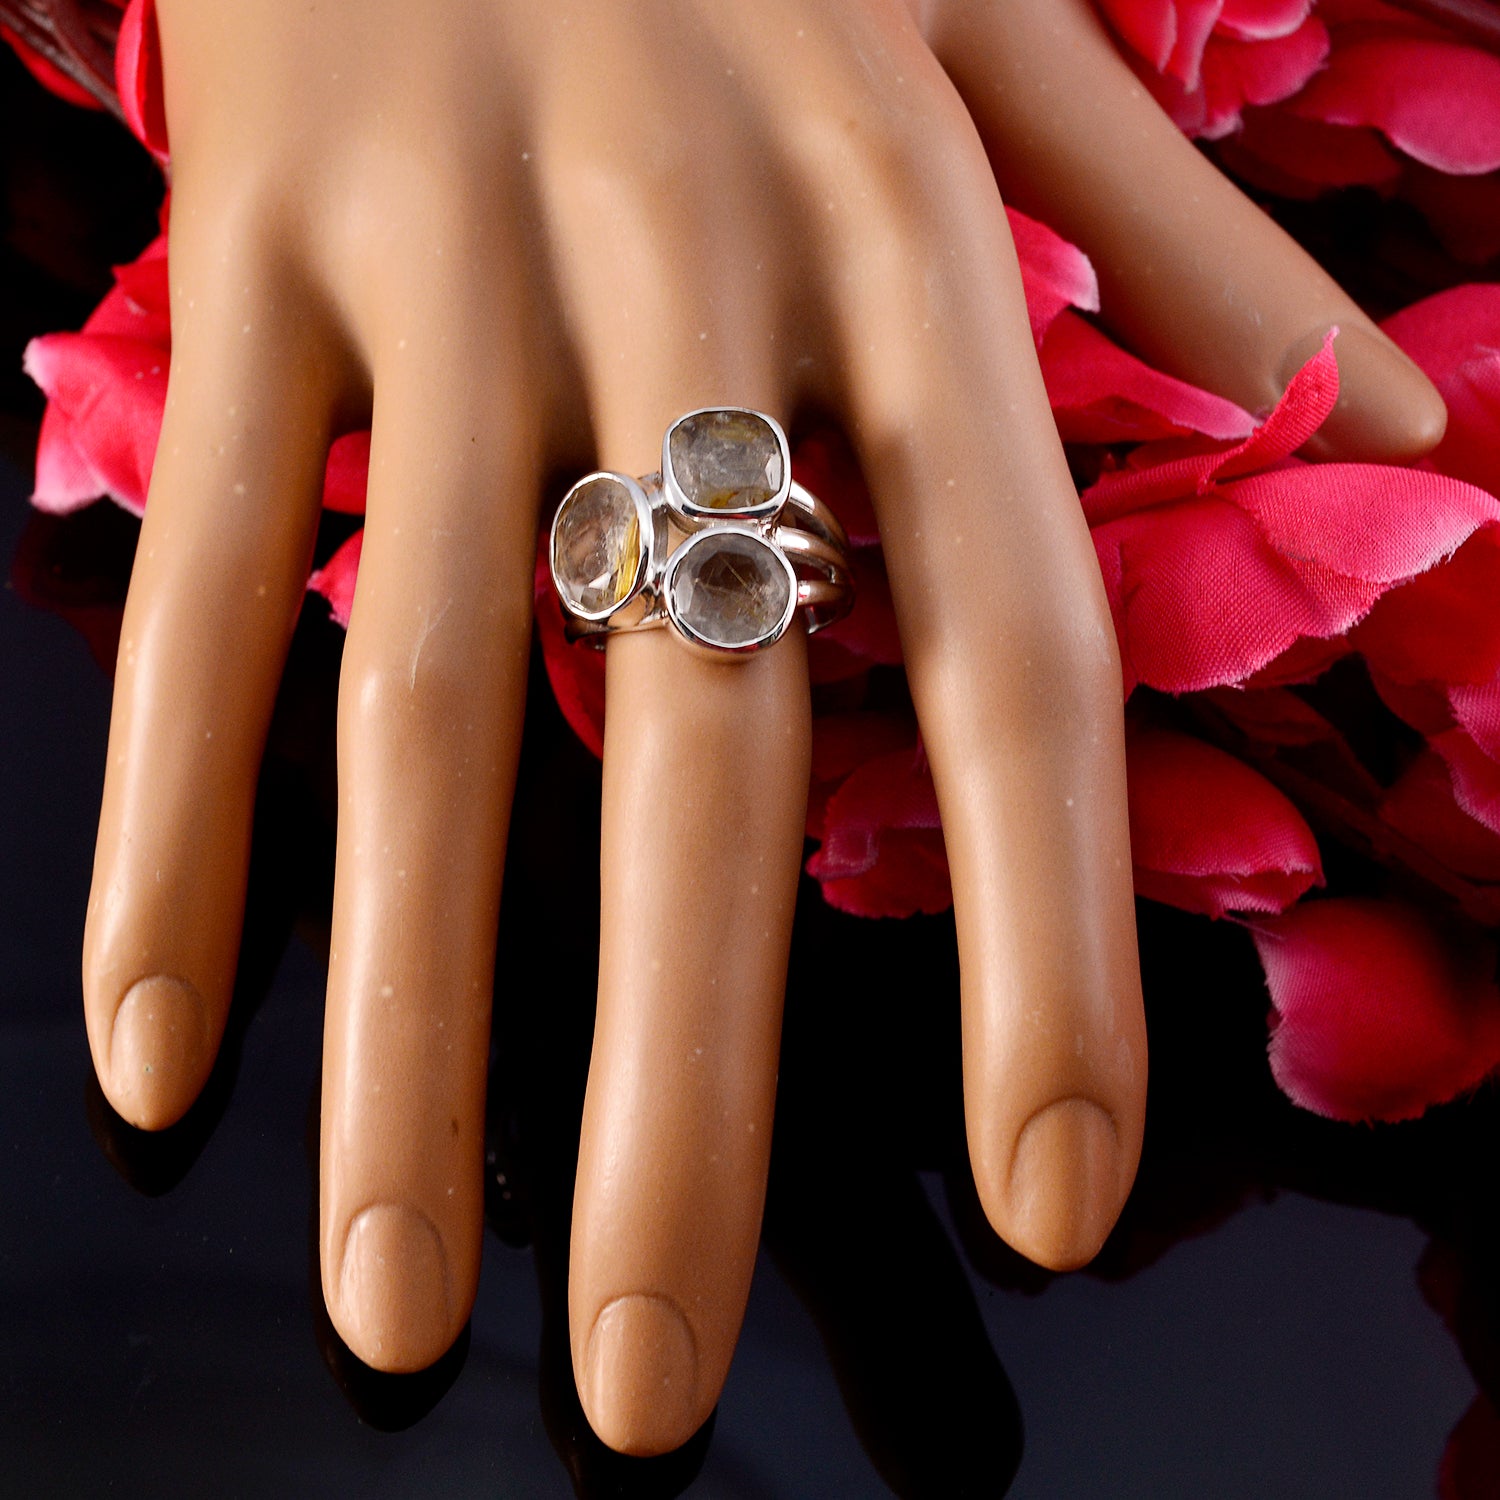 Presentable Gem Rutile Quartz Silver Ring Jewelry For Girlfriend